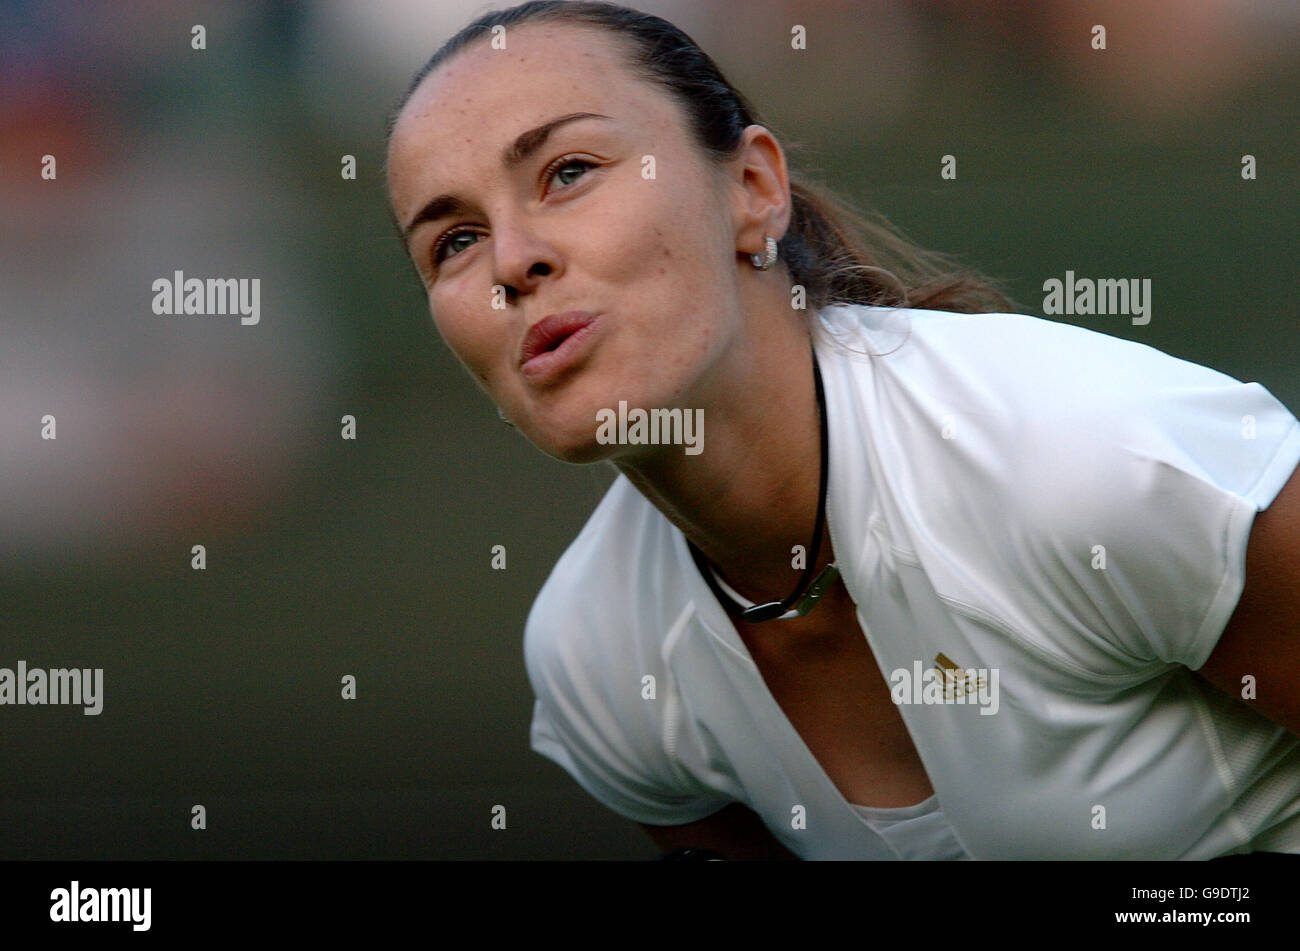 Tennis - Wimbledon Championships 2006 - First Round - Tathiana Garbin v Martina Hingis - All England Club Stock Photo